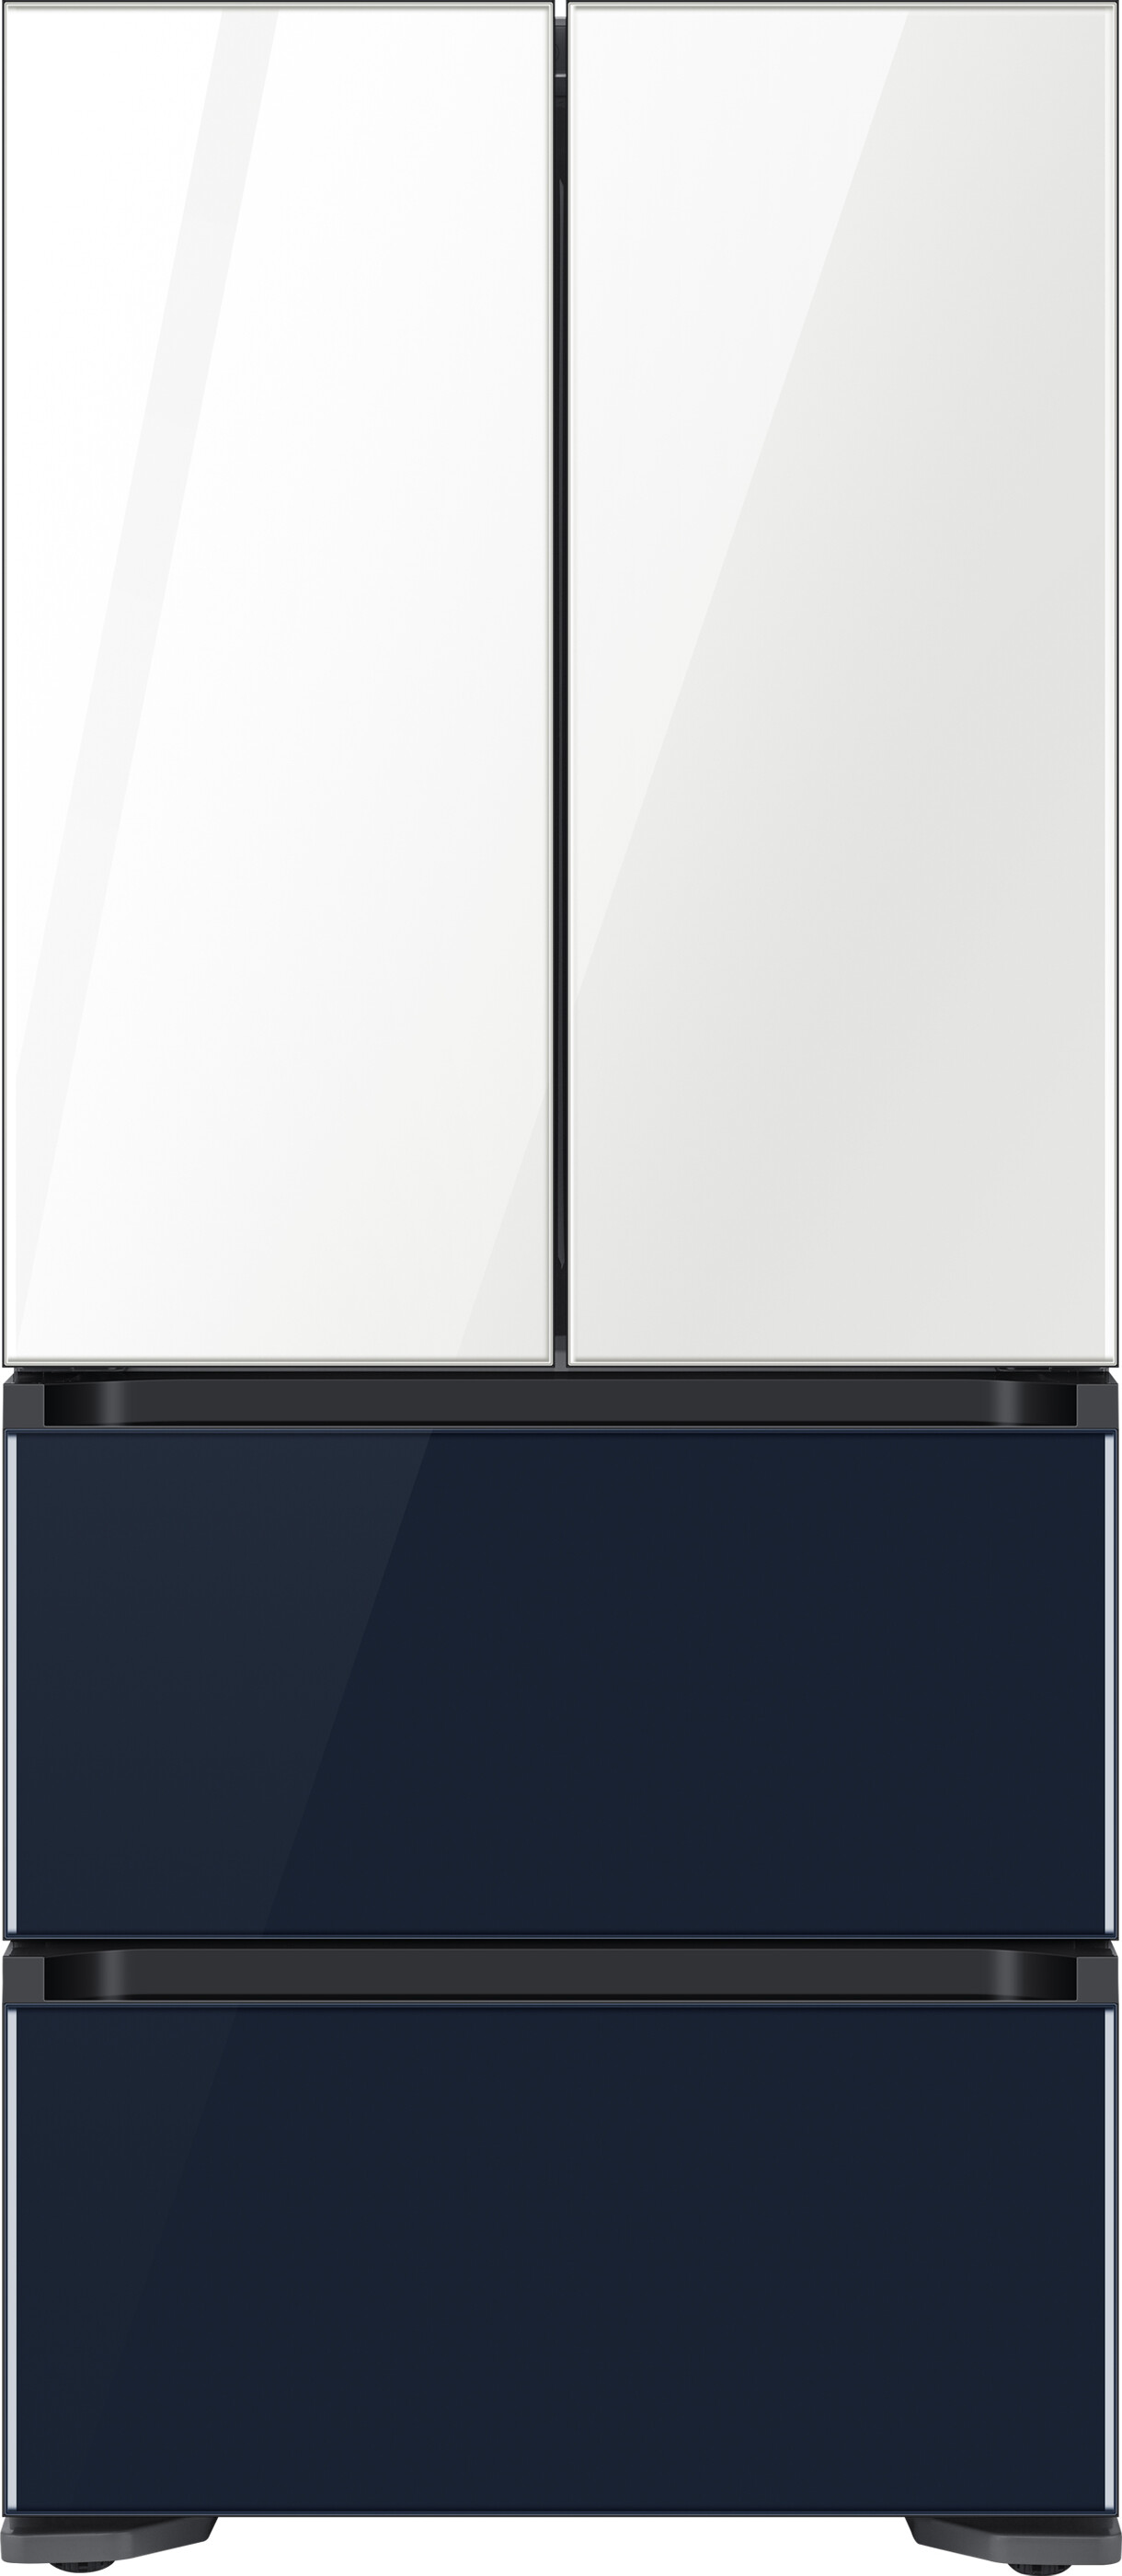 32 Inch 32"" French Door Refrigerator - Samsung RQ48T94B277